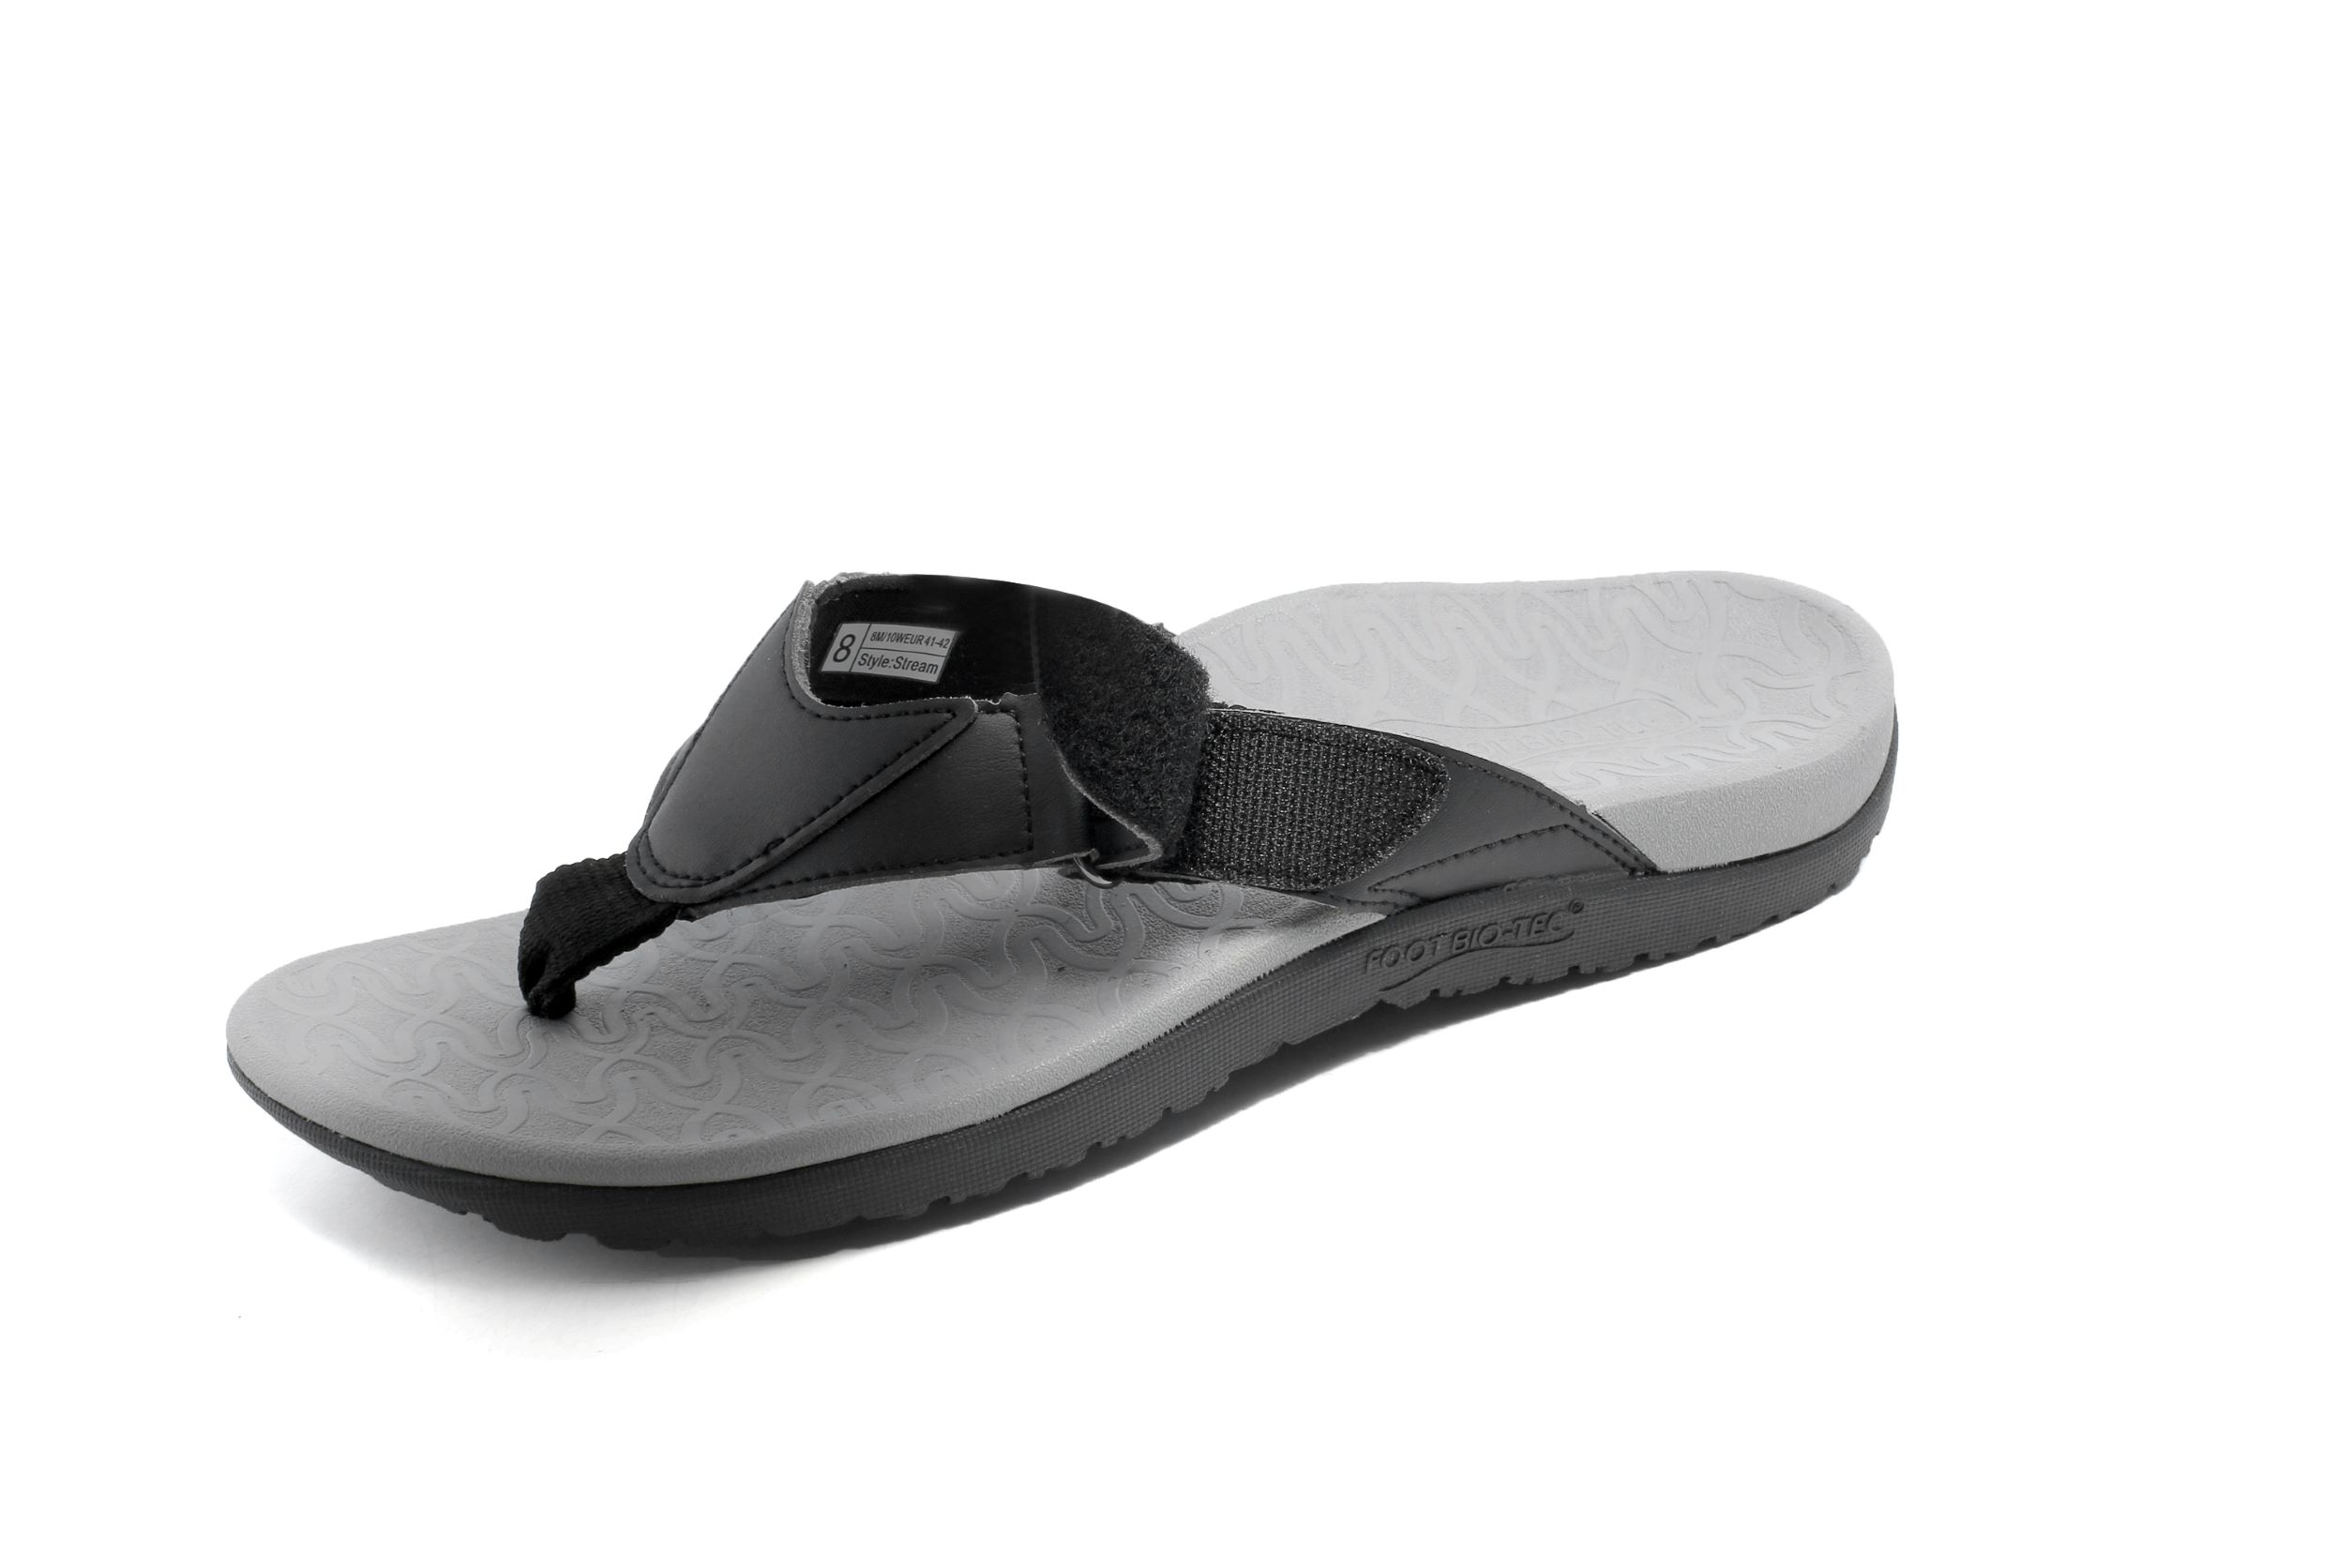 Stream Black (Men's Style) - Comfortable specialist orthotic footwear